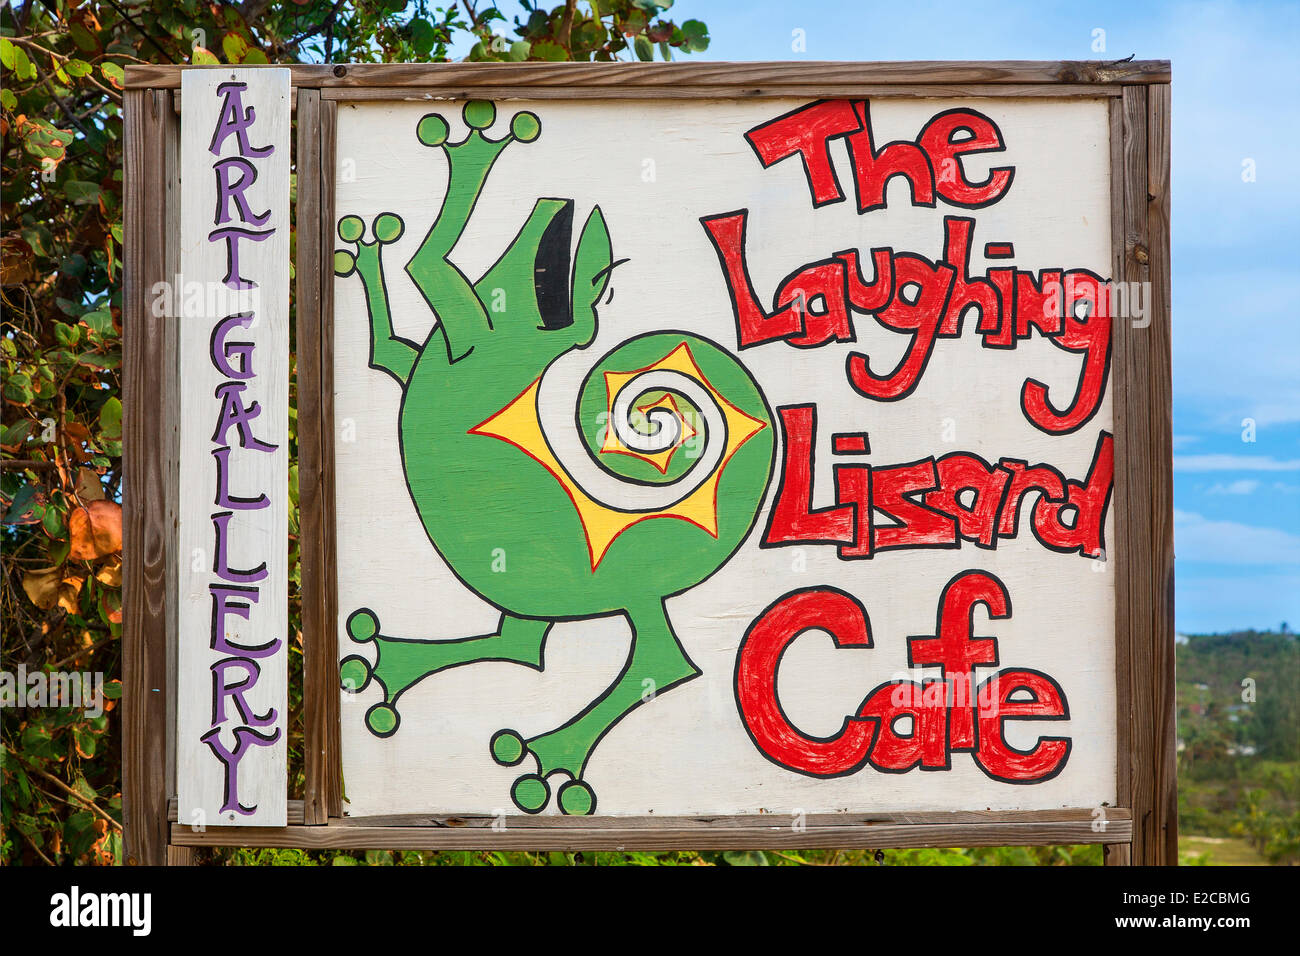 Bahamas, Eleuthera Island, Gregory Town, la risa Lizard Cafe Foto de stock